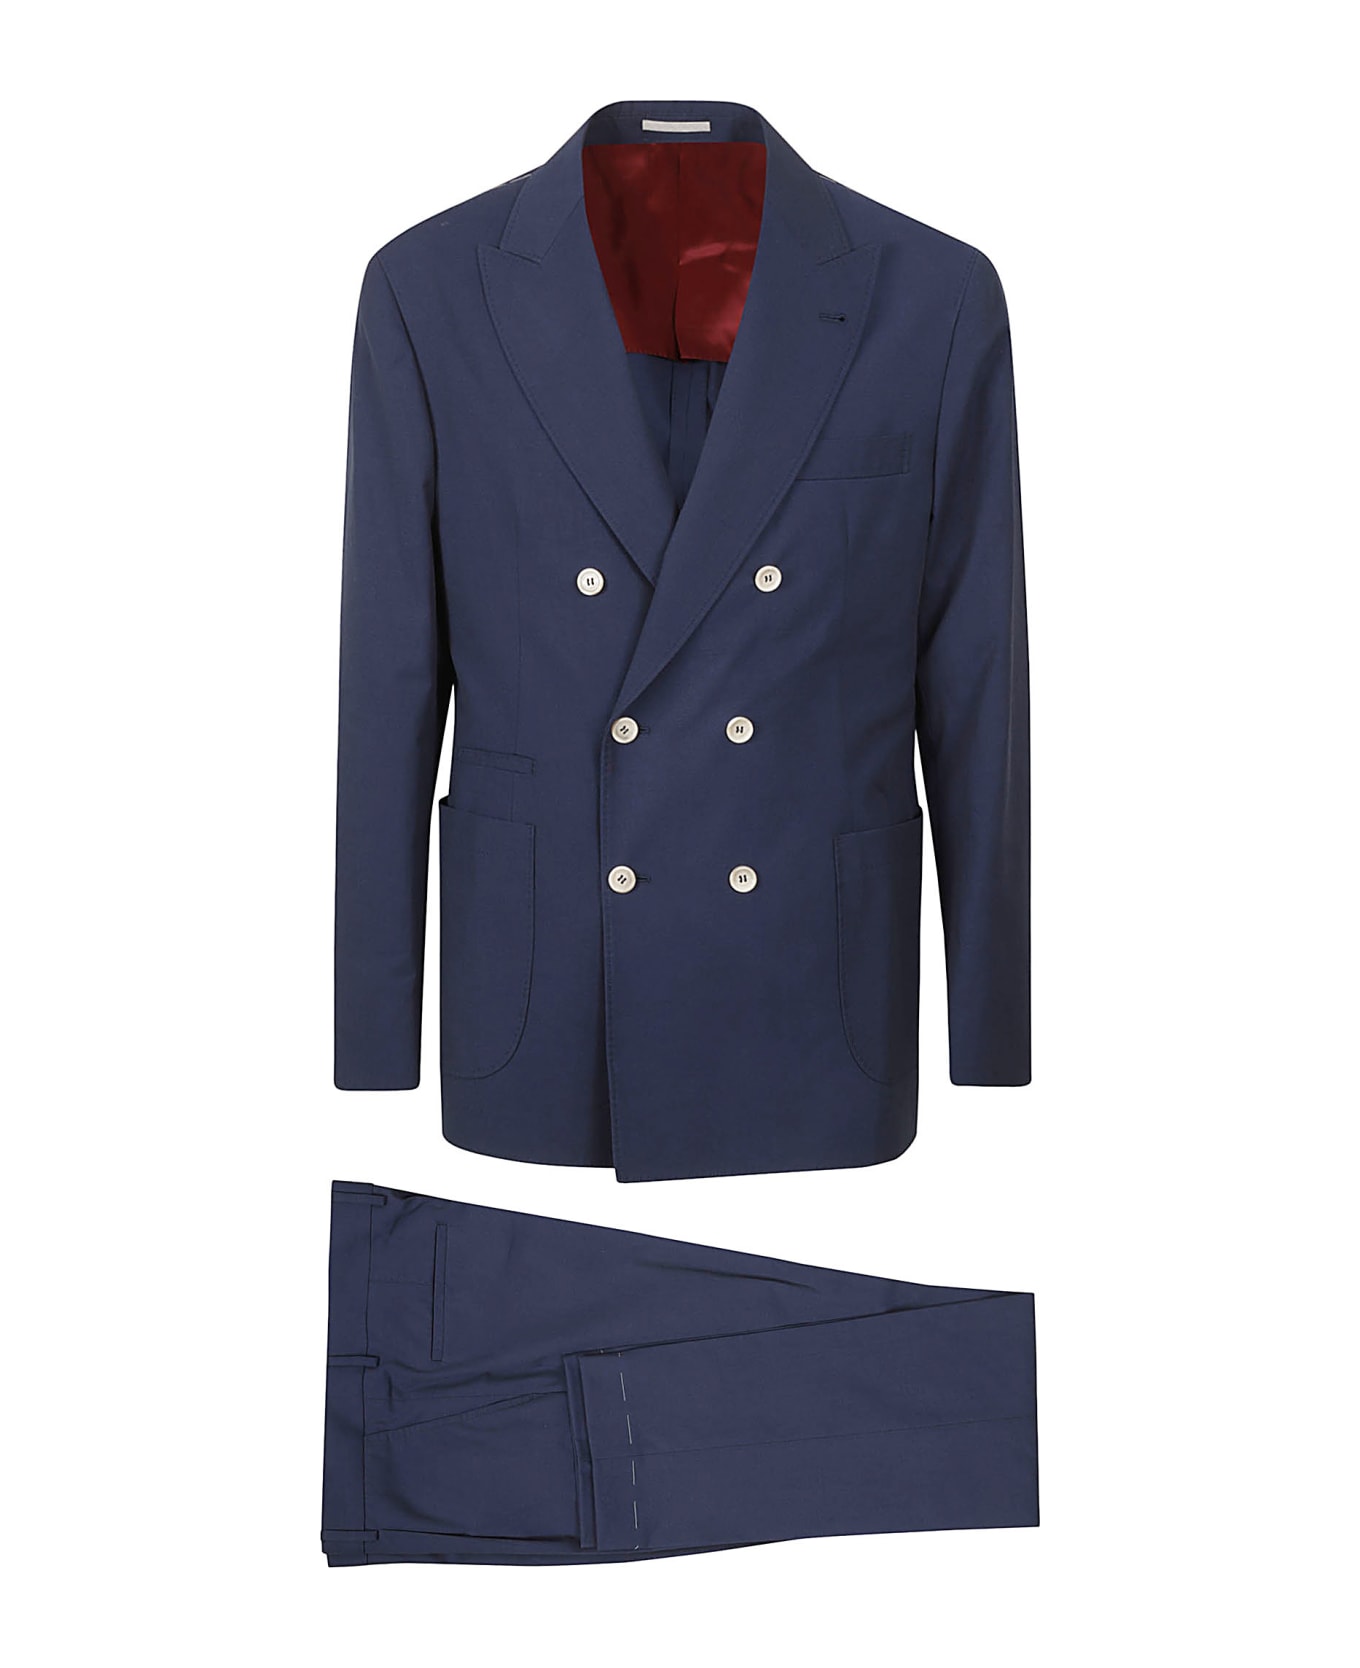 Brunello Cucinelli Leisure Suit - Ink Blue スーツ